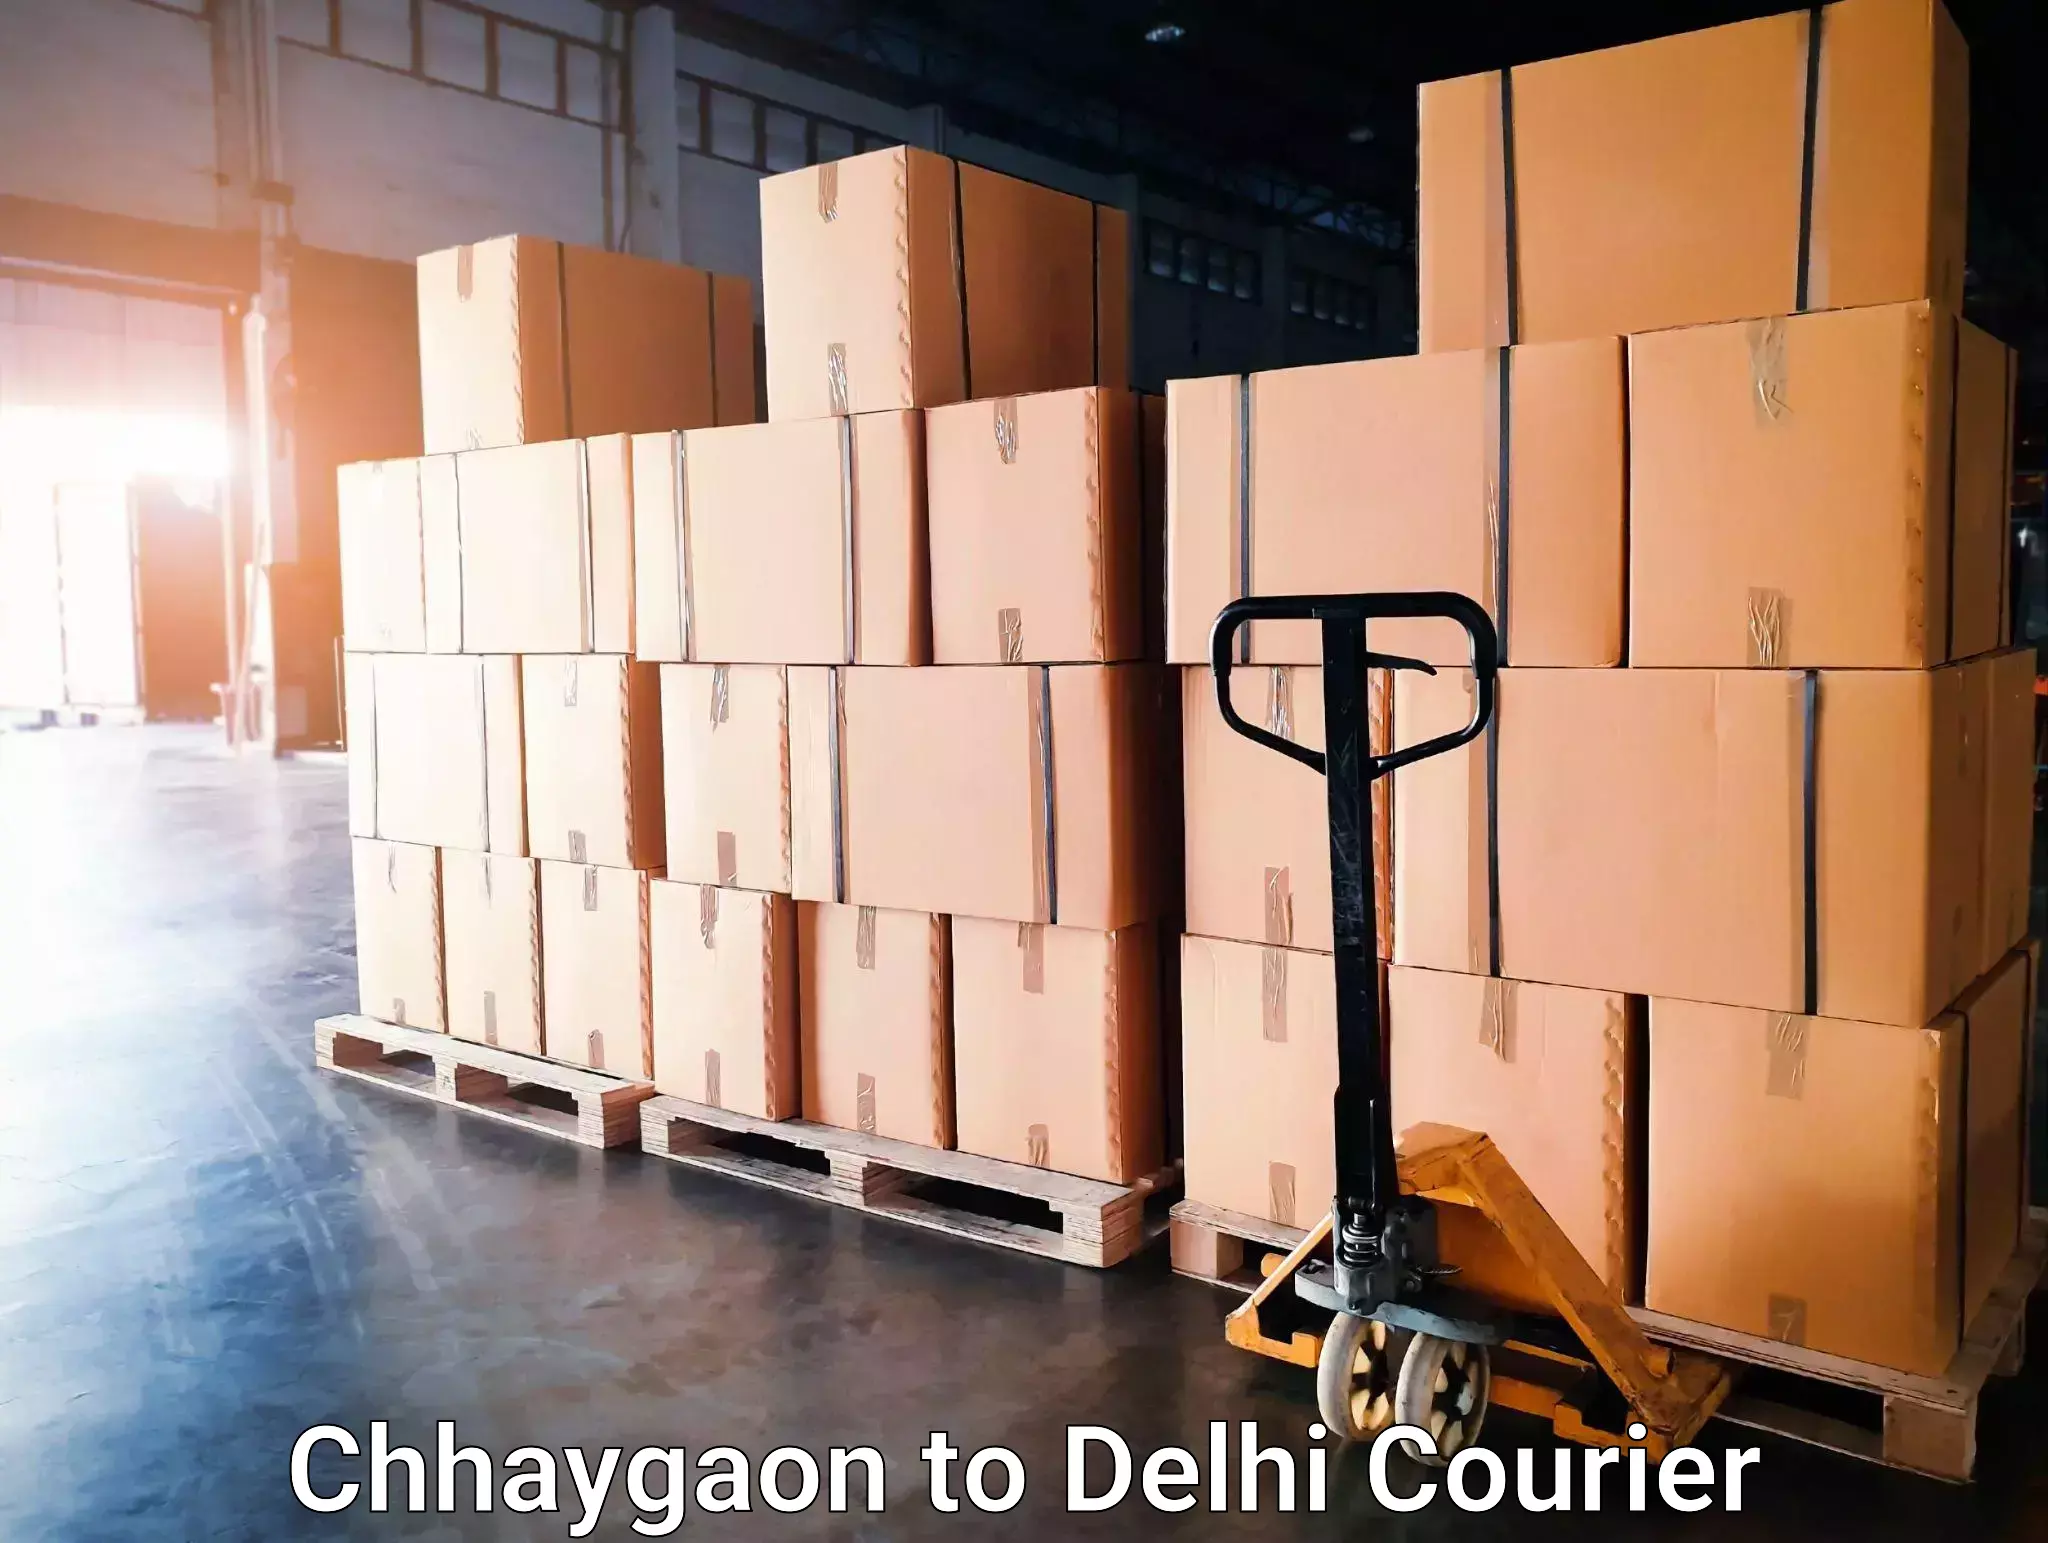 Courier service comparison in Chhaygaon to Sarojini Nagar